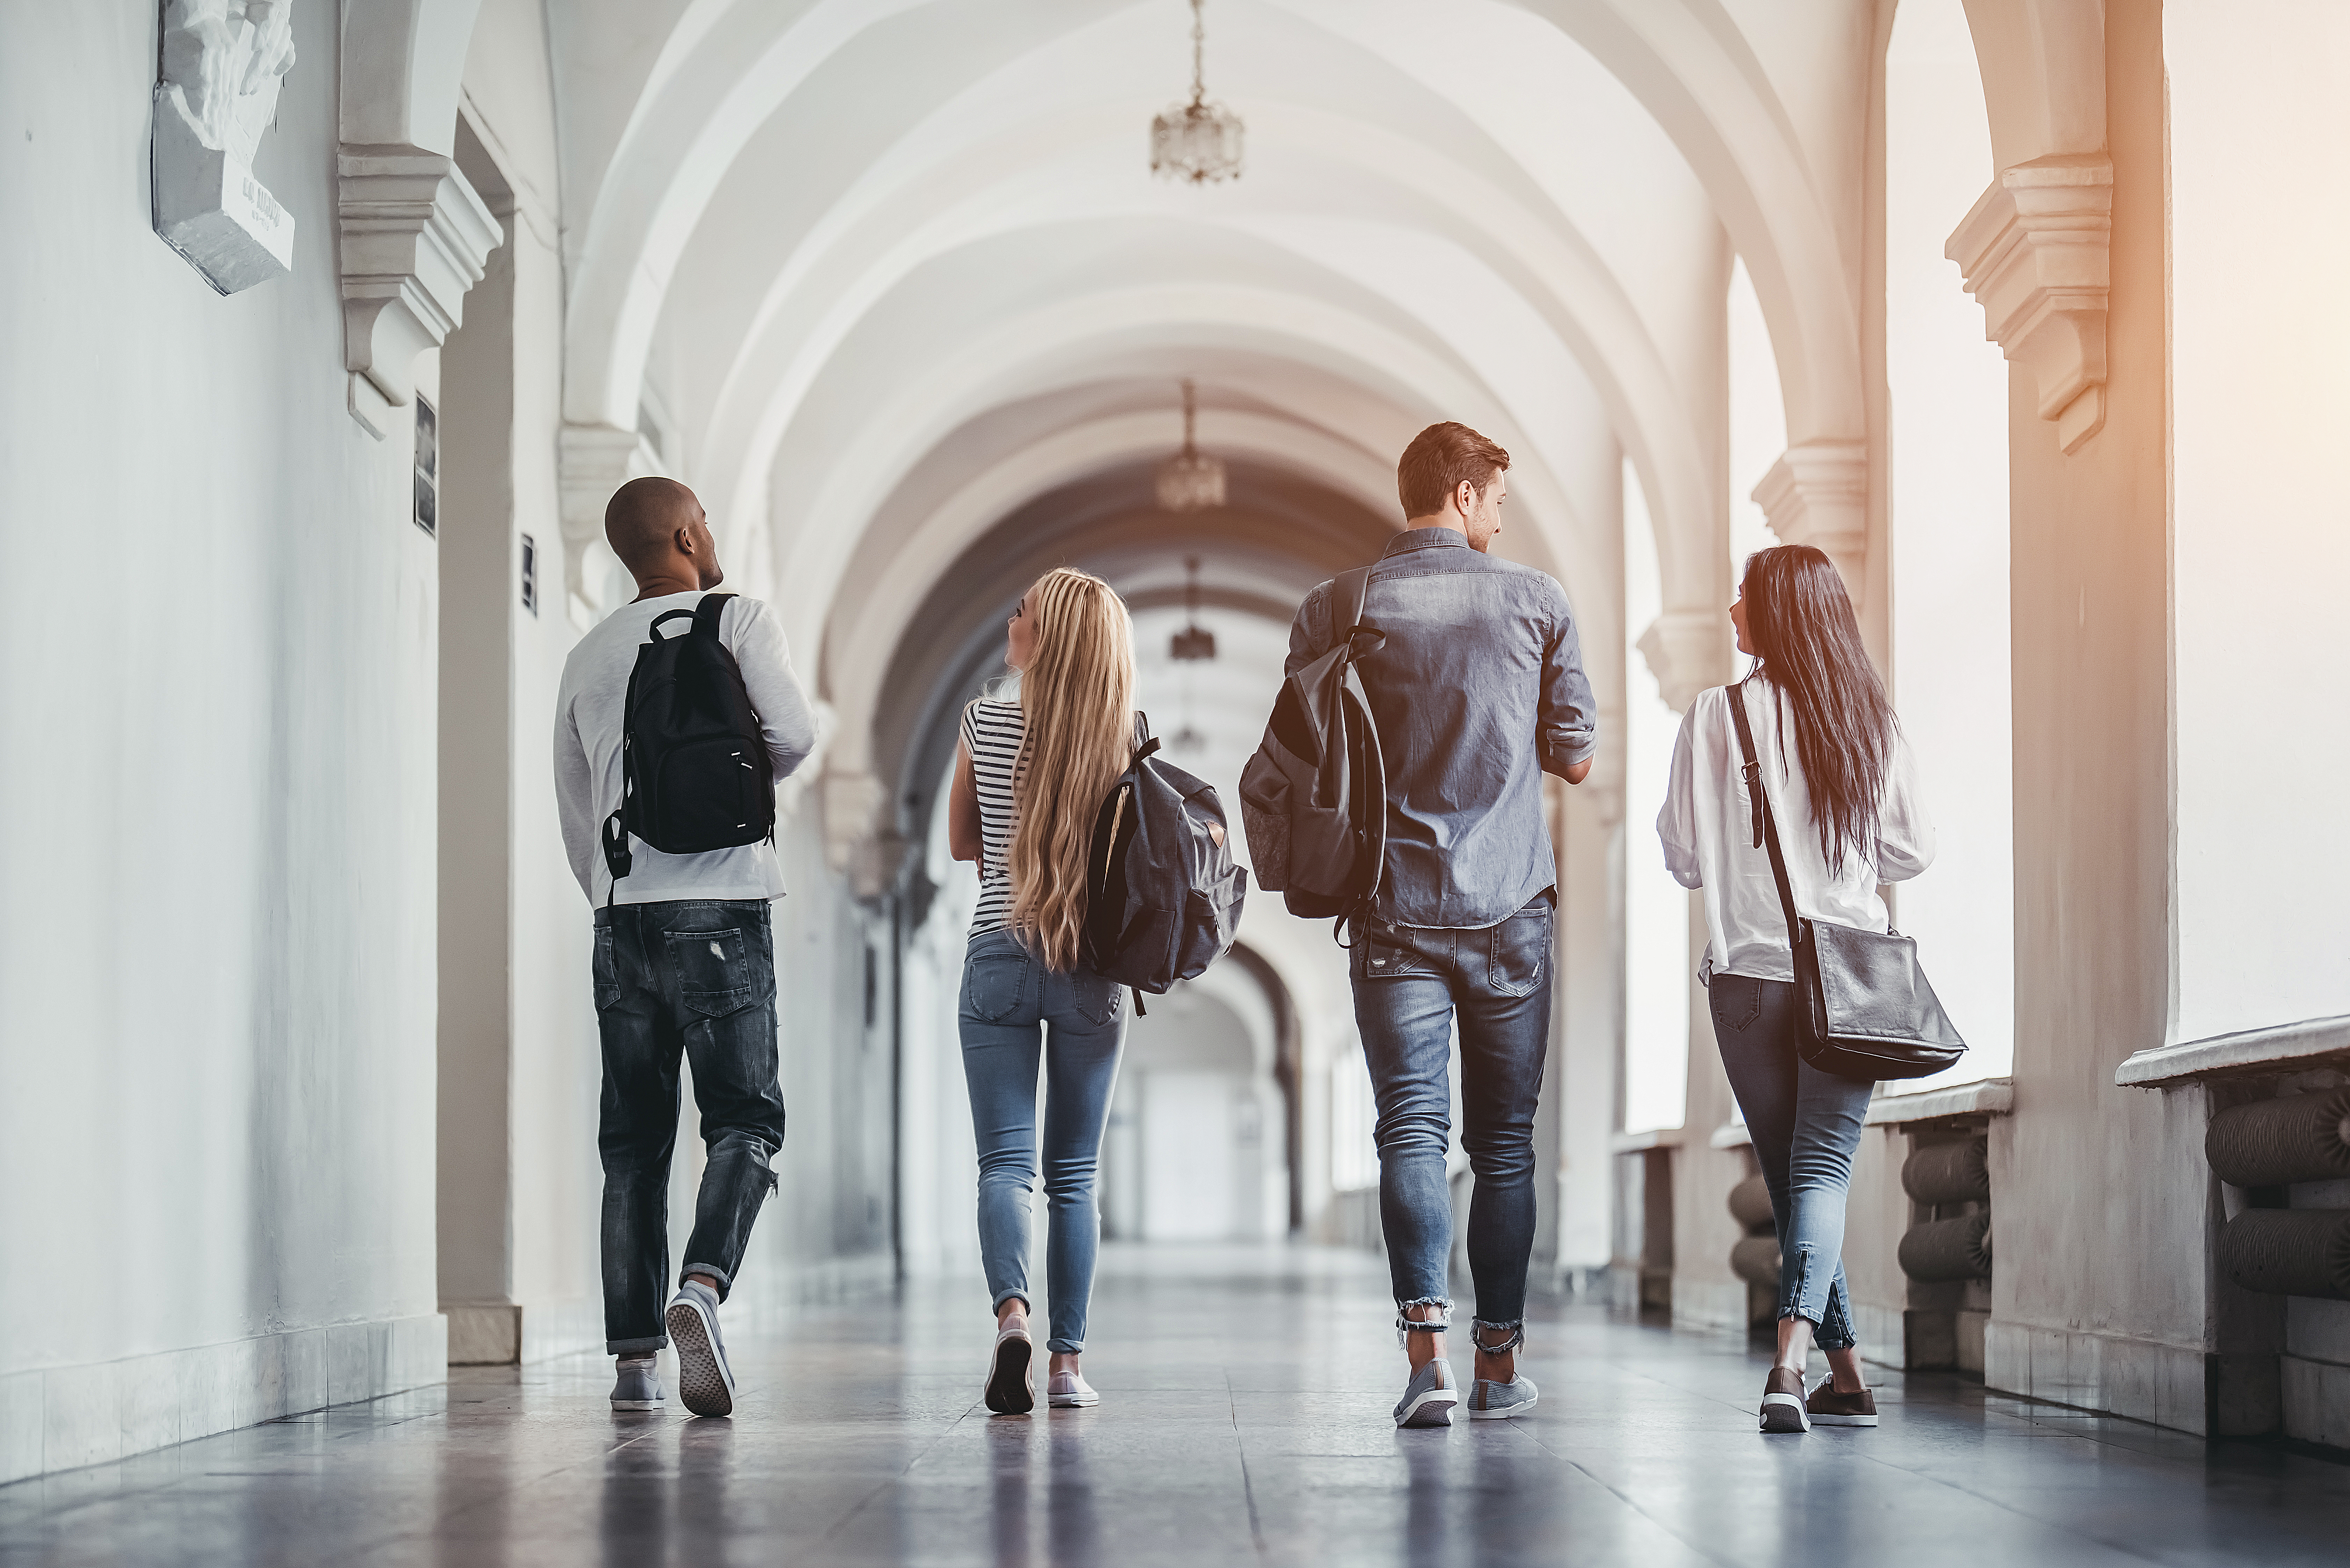 Students walking down a university corridor